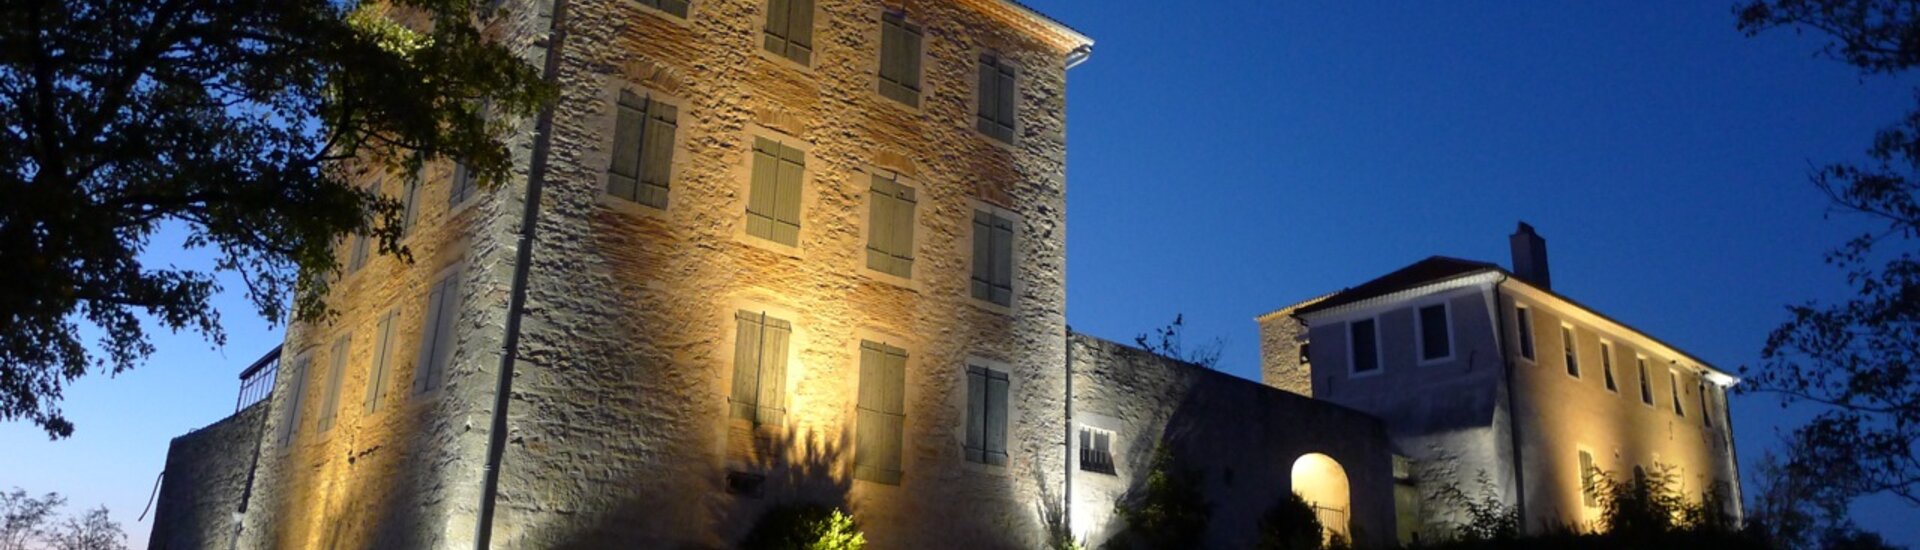 Le Château de Labastide-Marnhac